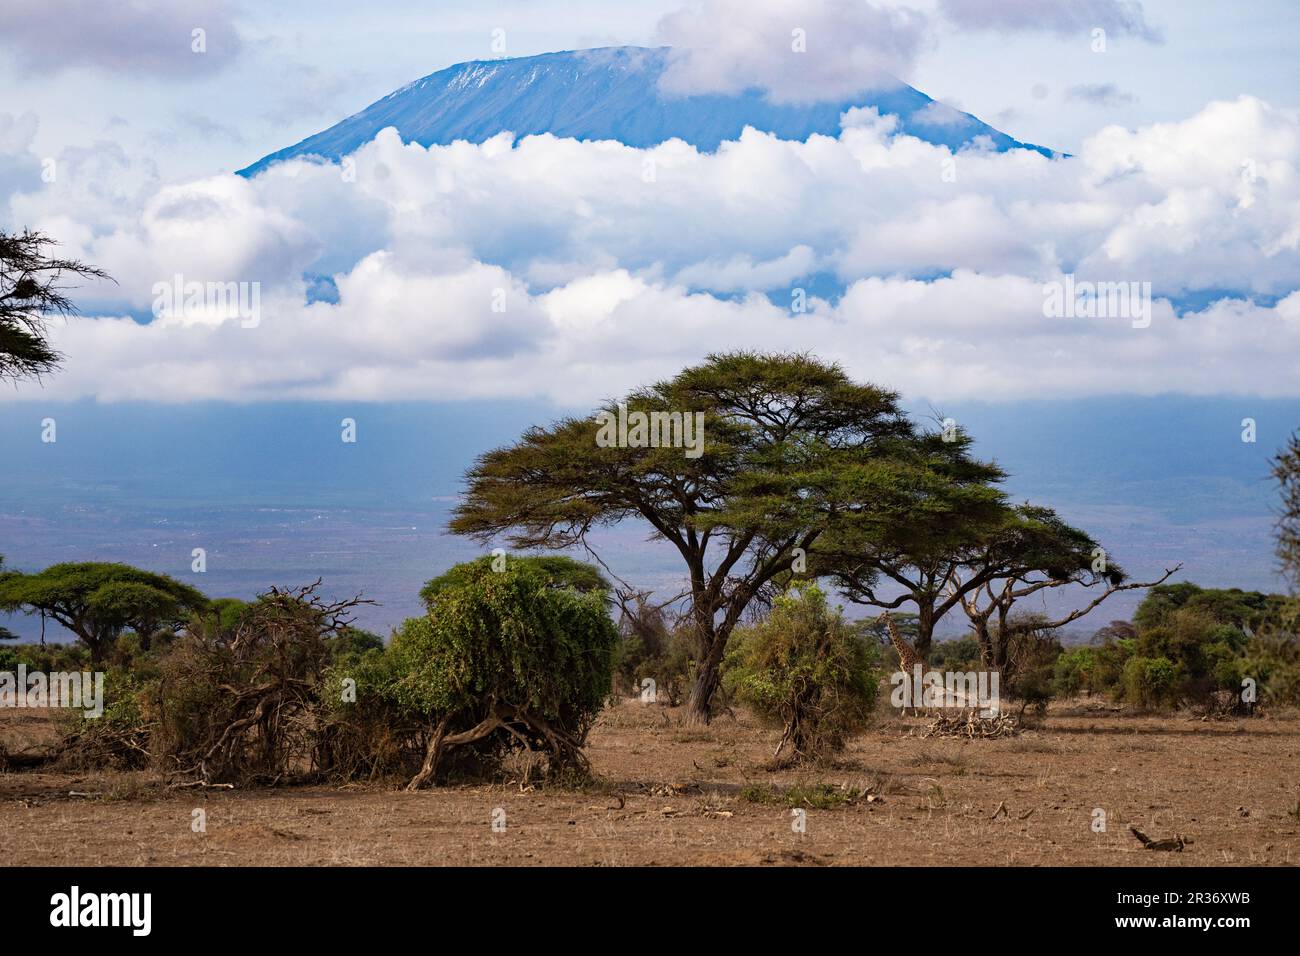 Giraffe under an acacia tree with Mt. Kilimanjaro in the background, Amboseli National Park, Kenya Stock Photo